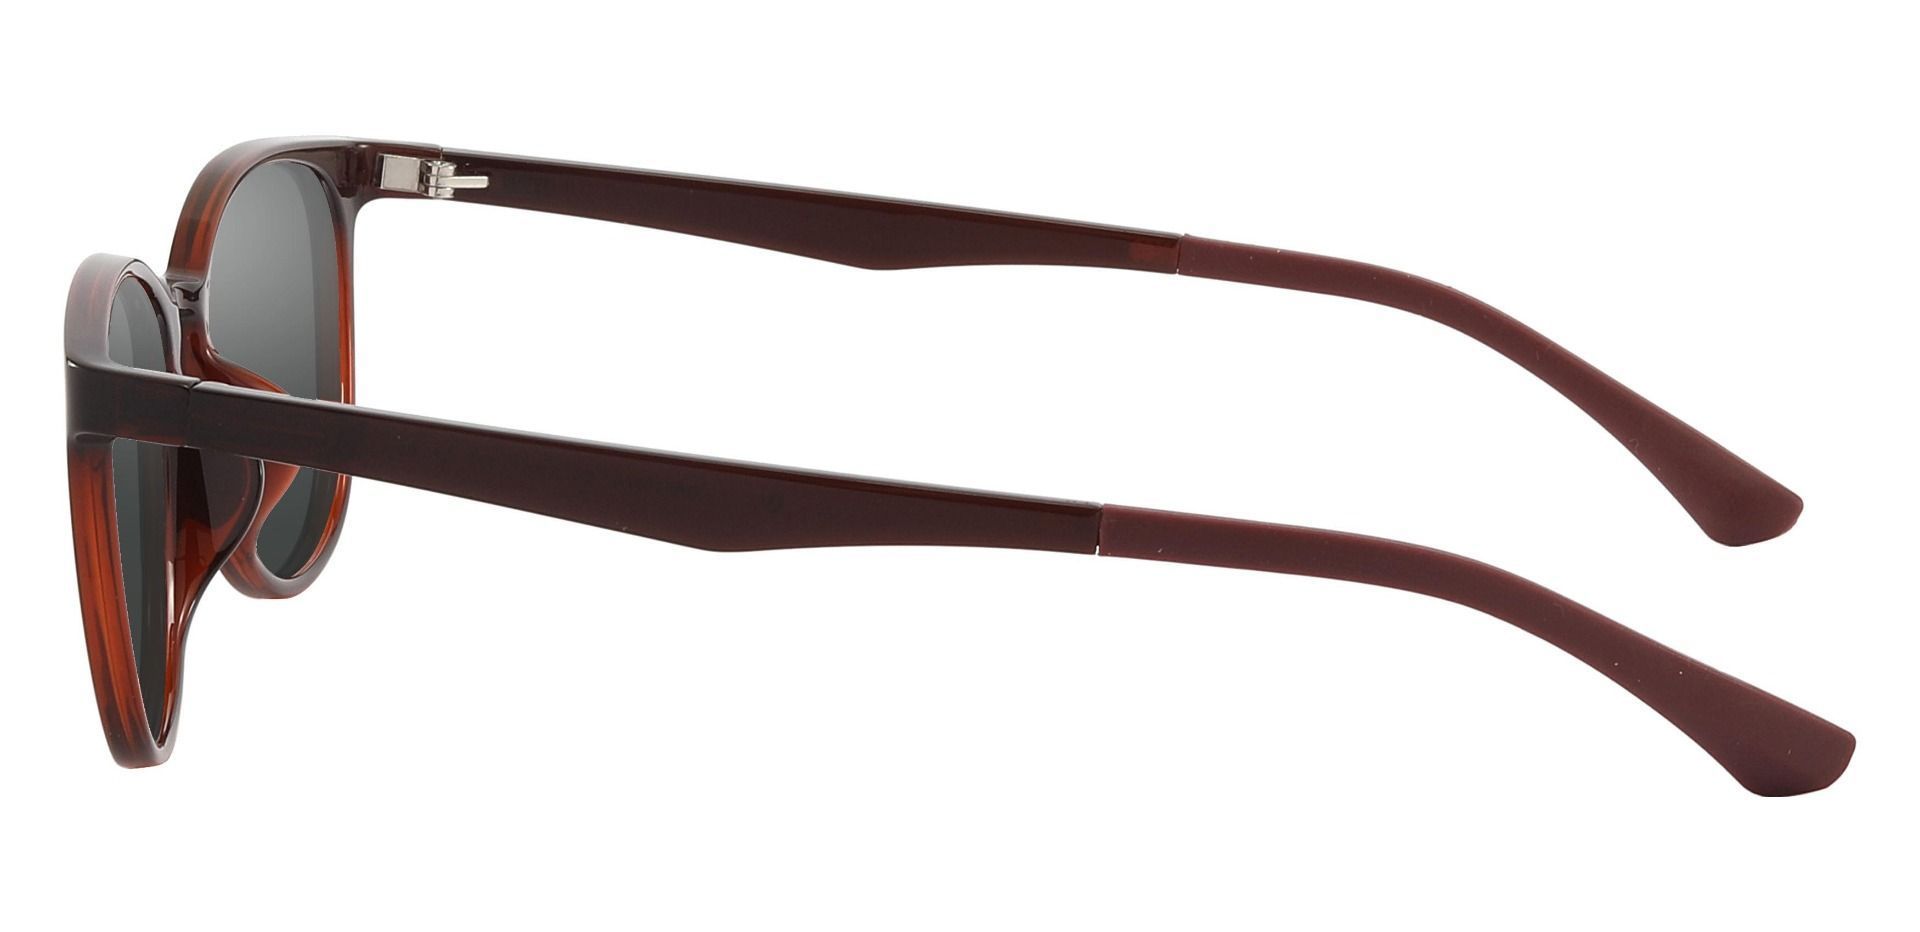 Pembroke Oval Progressive Sunglasses - Brown Frame With Gray Lenses